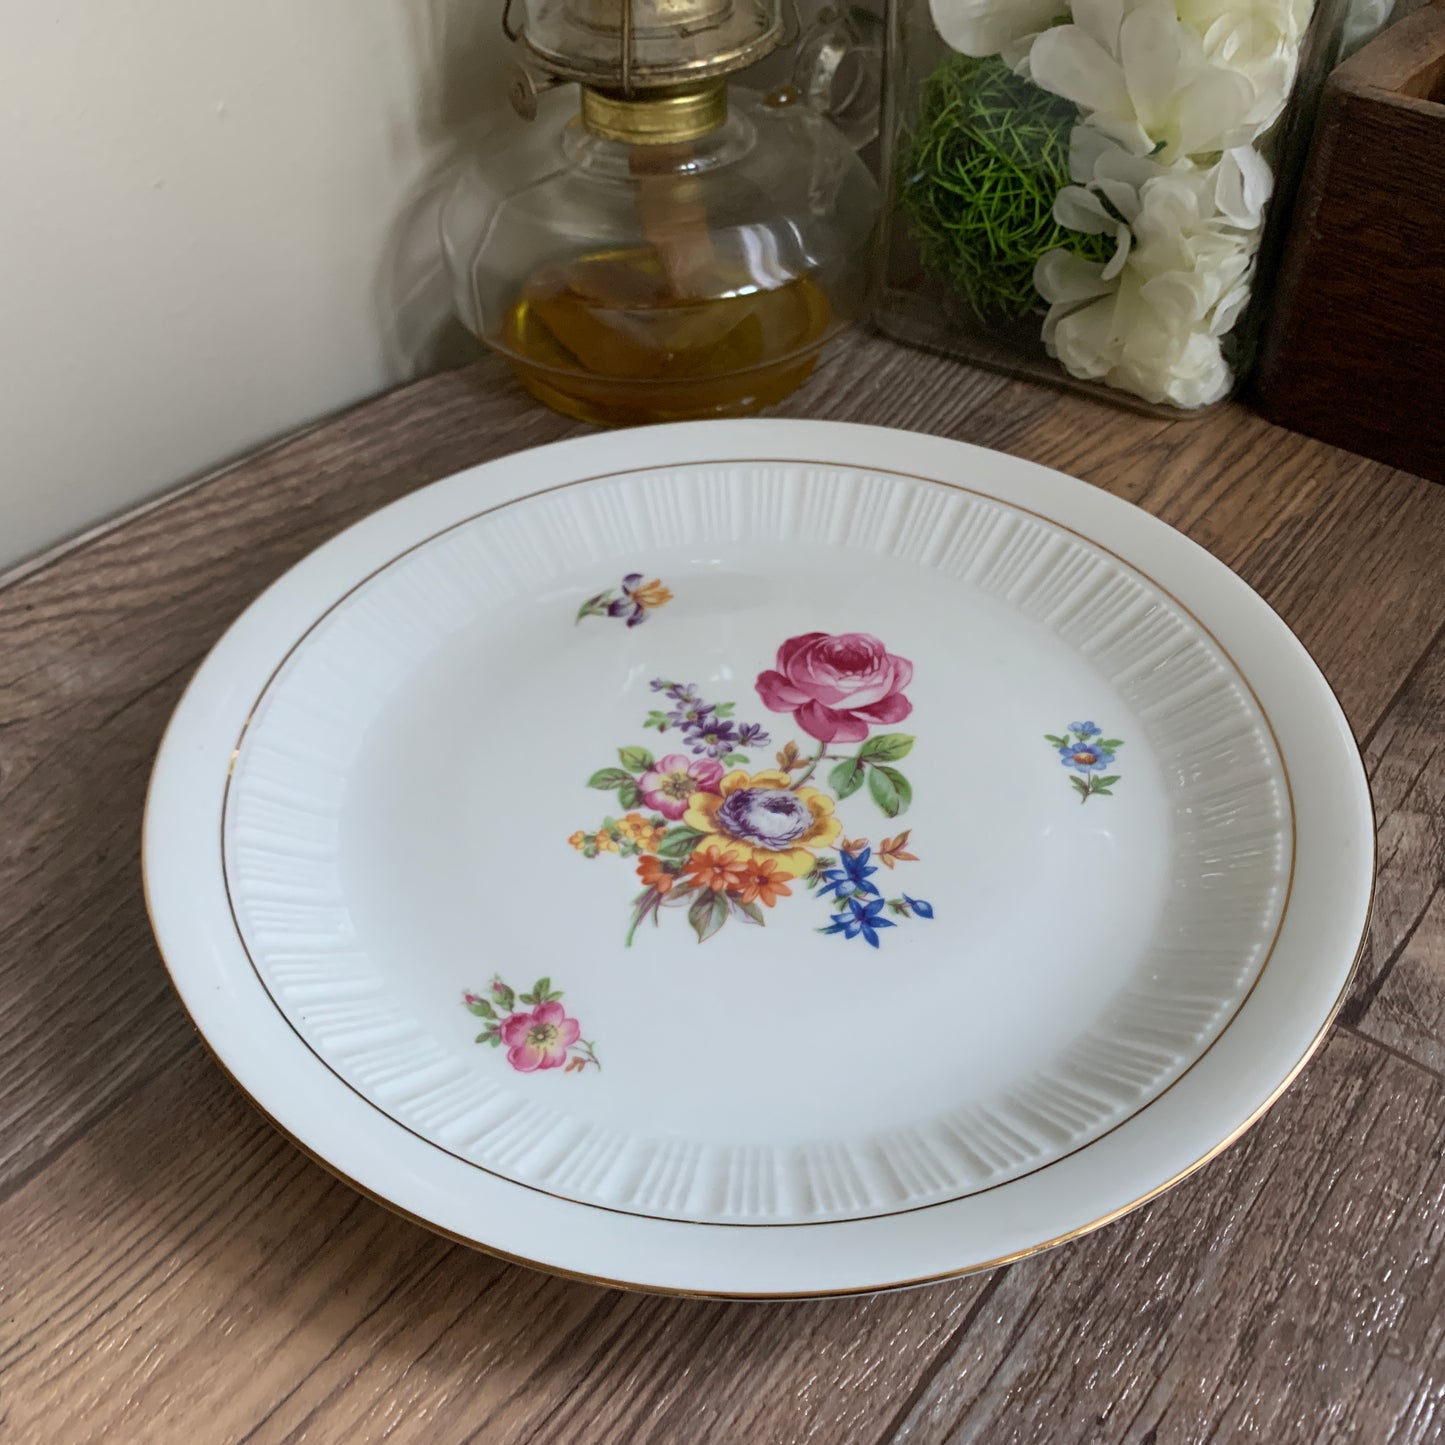 Vintage German Porcelain Dinner Plates with Colourful Floral Pattern